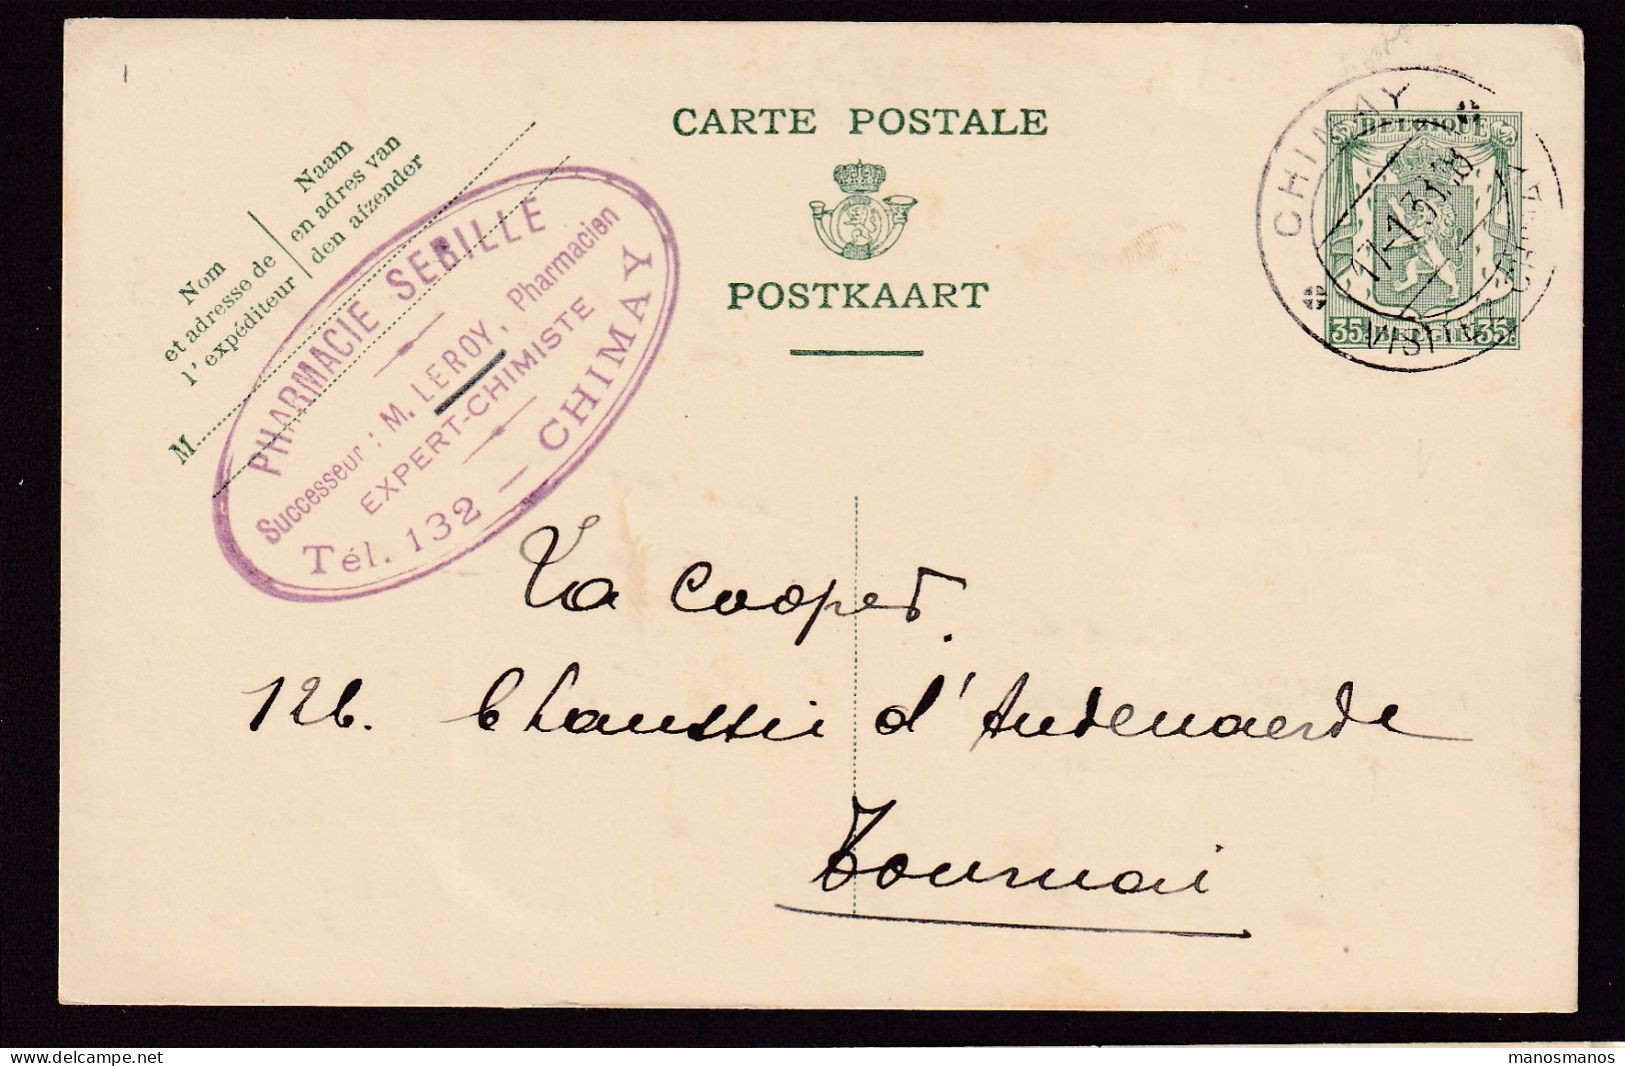 DDEE 867 -- Entier Postal Petit Sceau CHIMAY 1938 à TOURNAI - Cachet Privé Pharmacie Sebille, Leroy Pharmacien-Chimiste - Postkarten 1934-1951